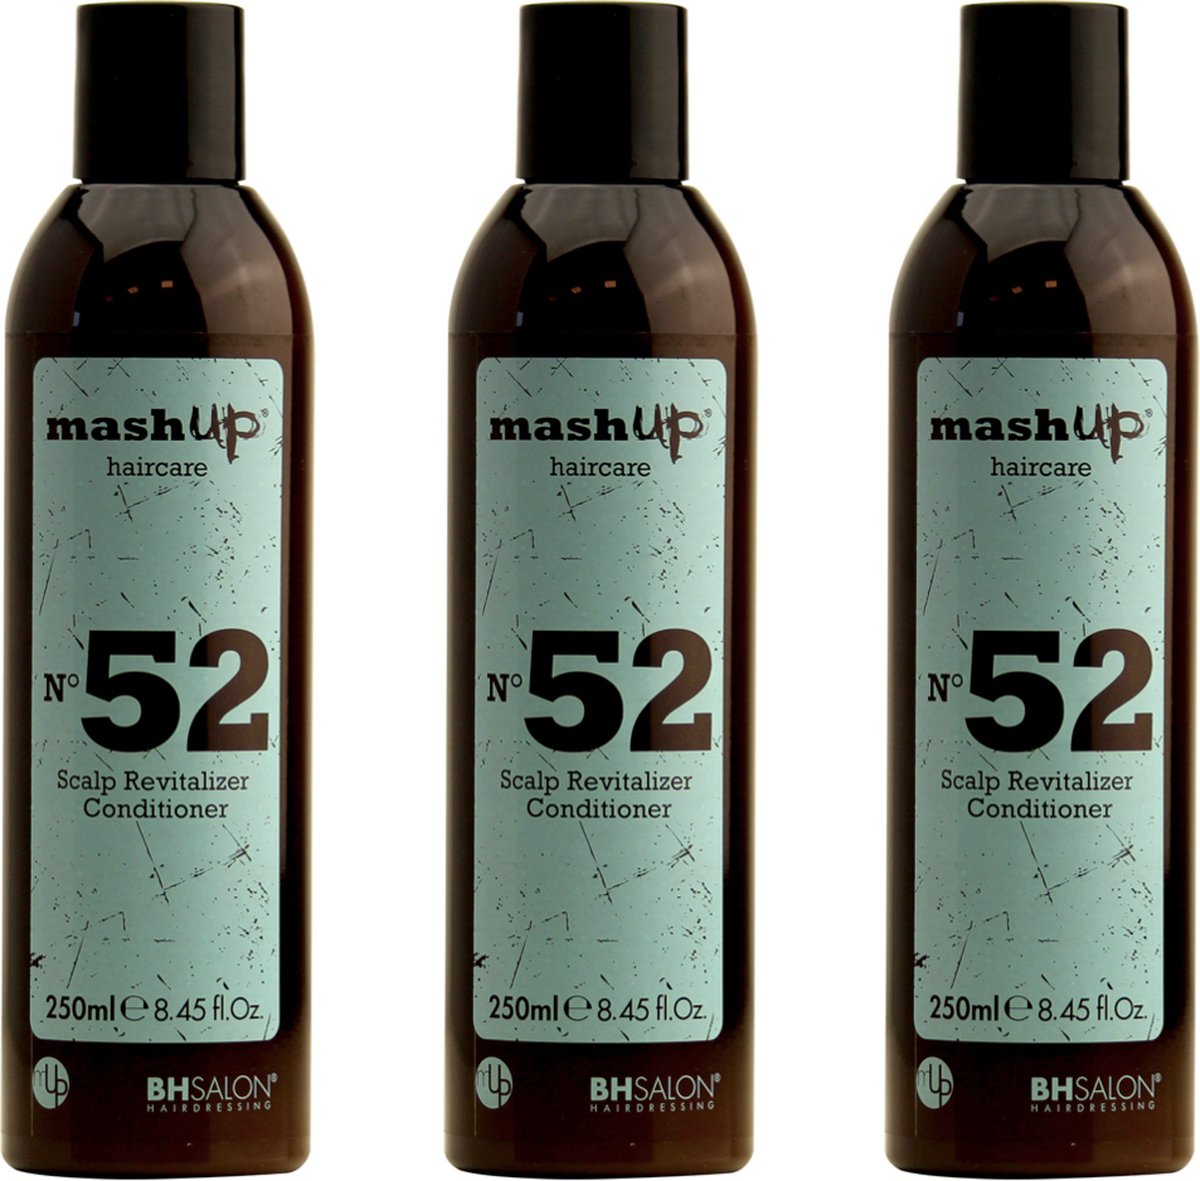 mashUp haircare N° 52 Scalp Revitalizer Conditioner 250ml - 3 stuks